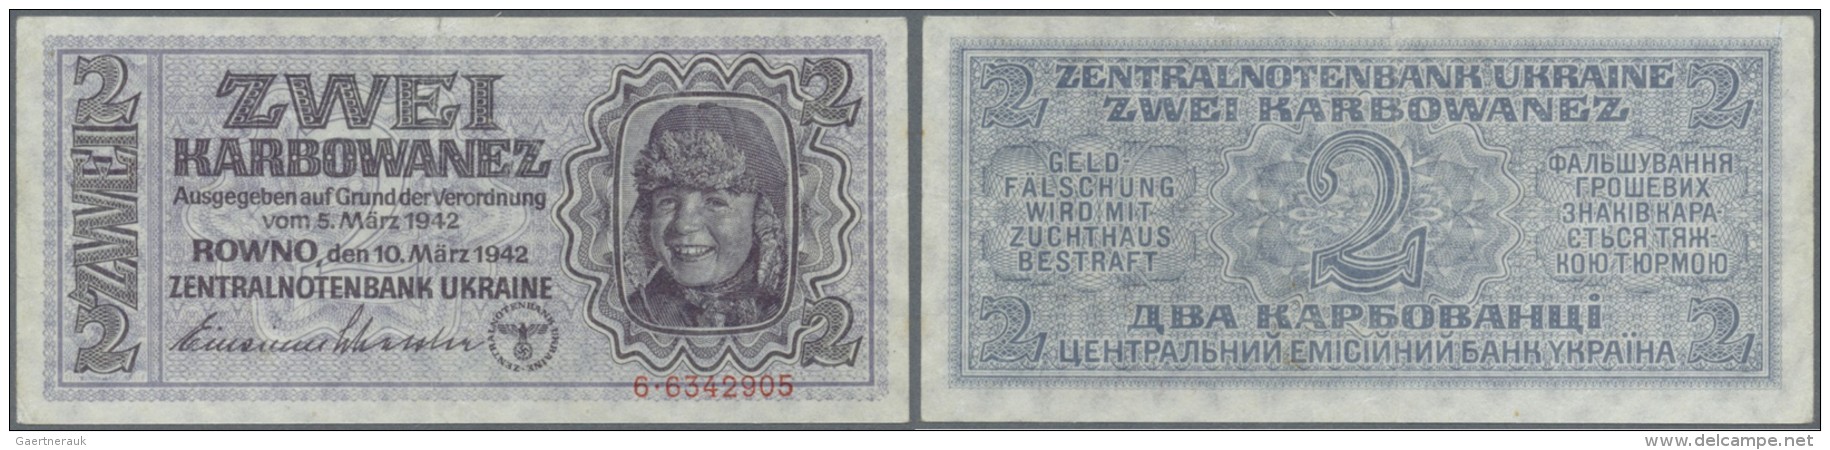 Ukraina / Ukraine: 2 Karbowanez 1942 Zentralnotenbank Ukraine, P.50 (Ro.592), Very Rare Banknote Still In Nice Condition - Ukraine